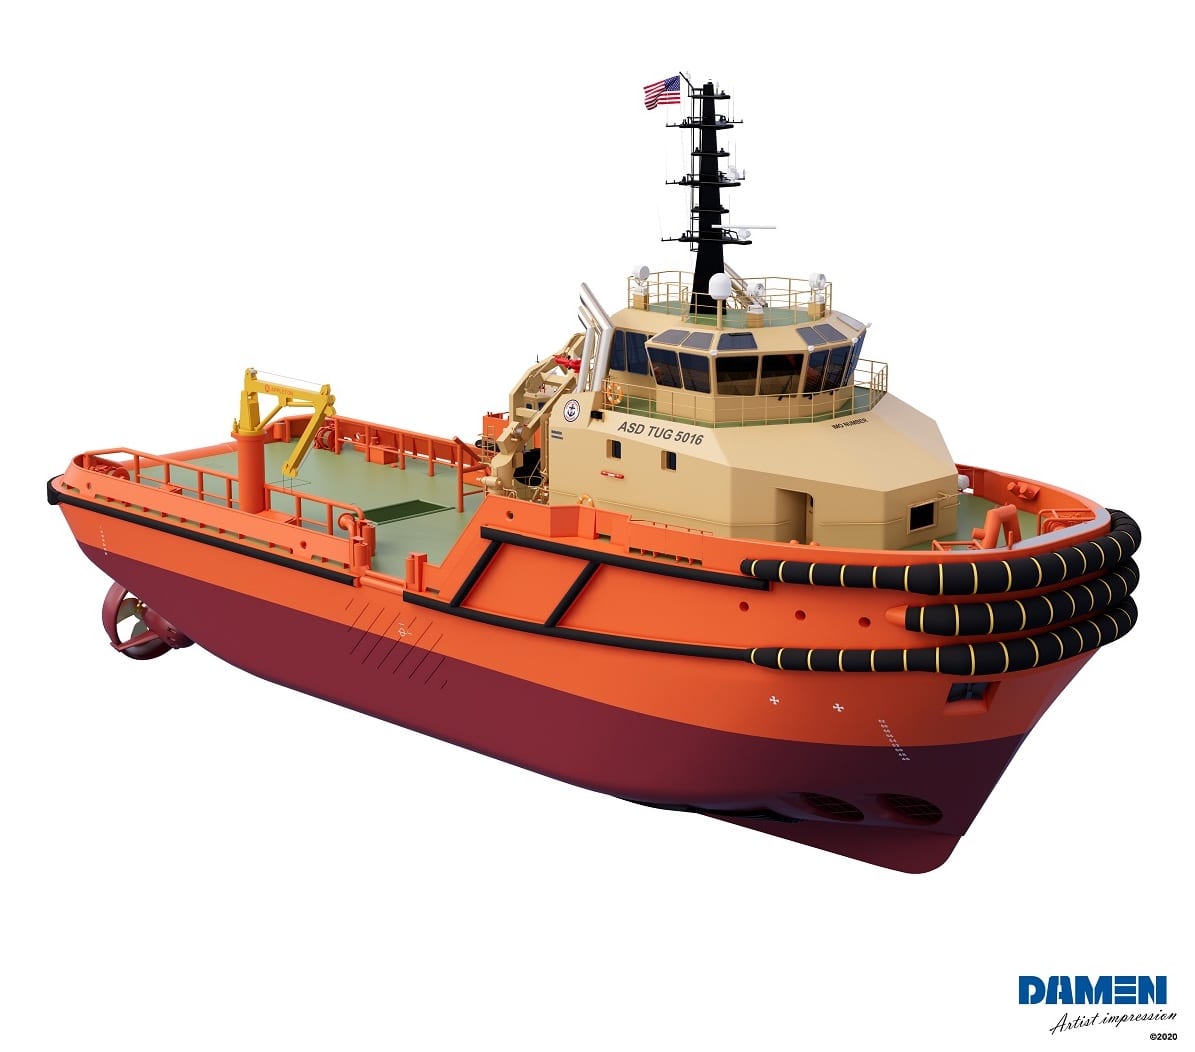 Damen to Supply ASD Tug 5016 Design to Edison Chouest Offshore